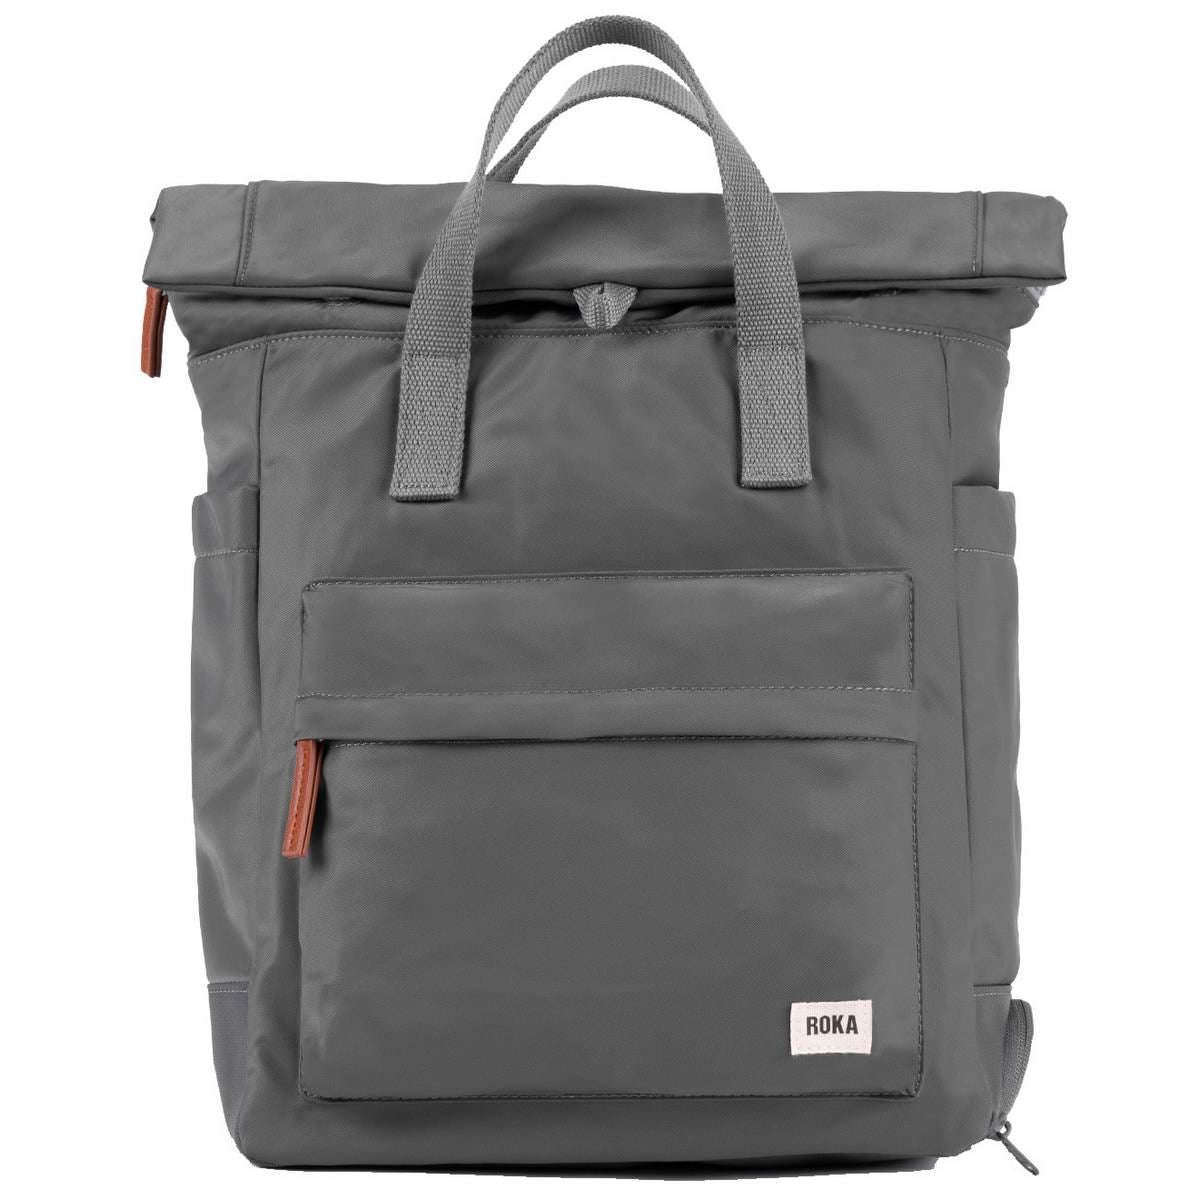 Roka Bayswater B Medium Sustainable Nylon Backpack - Graphite Grey